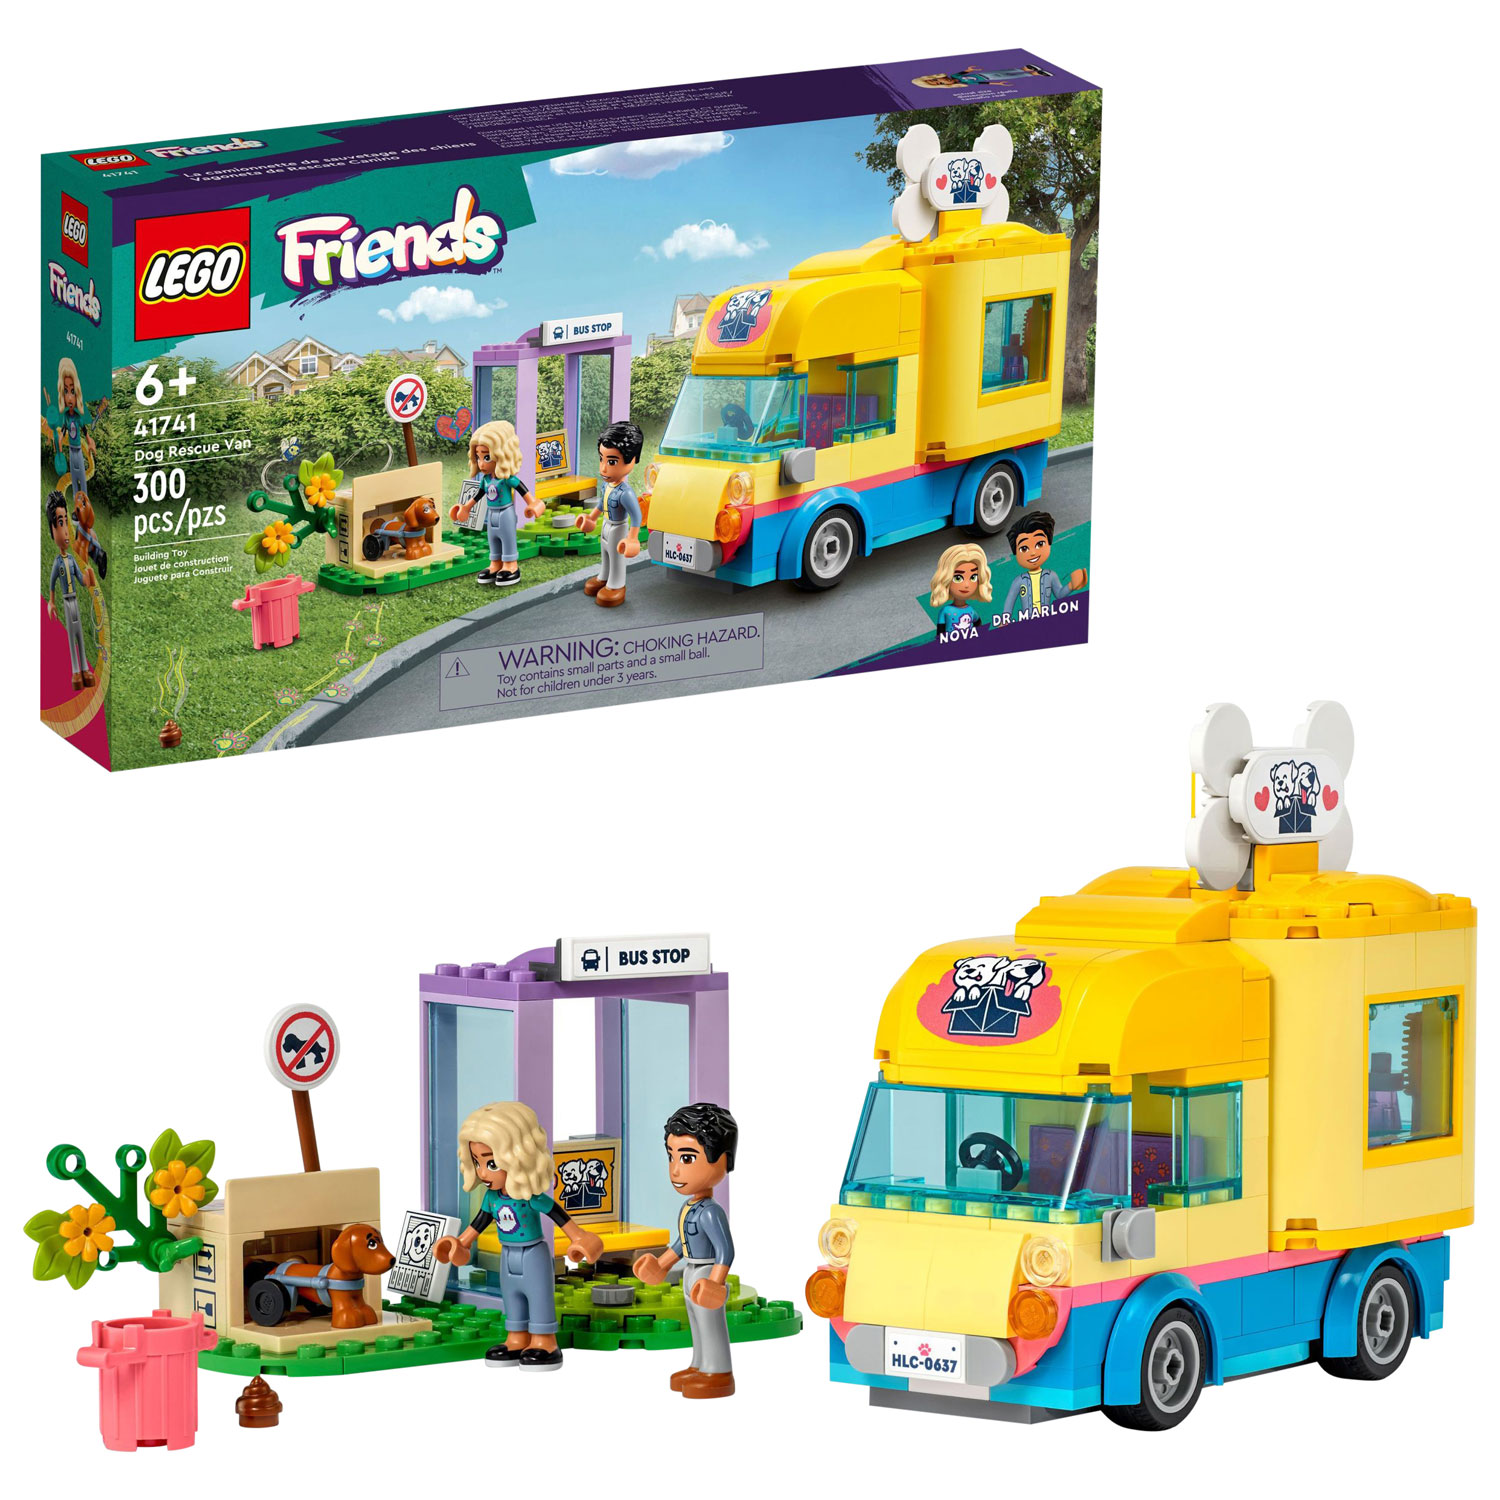 LEGO Friends: Dog Rescue Van - 300 Pieces (41741)